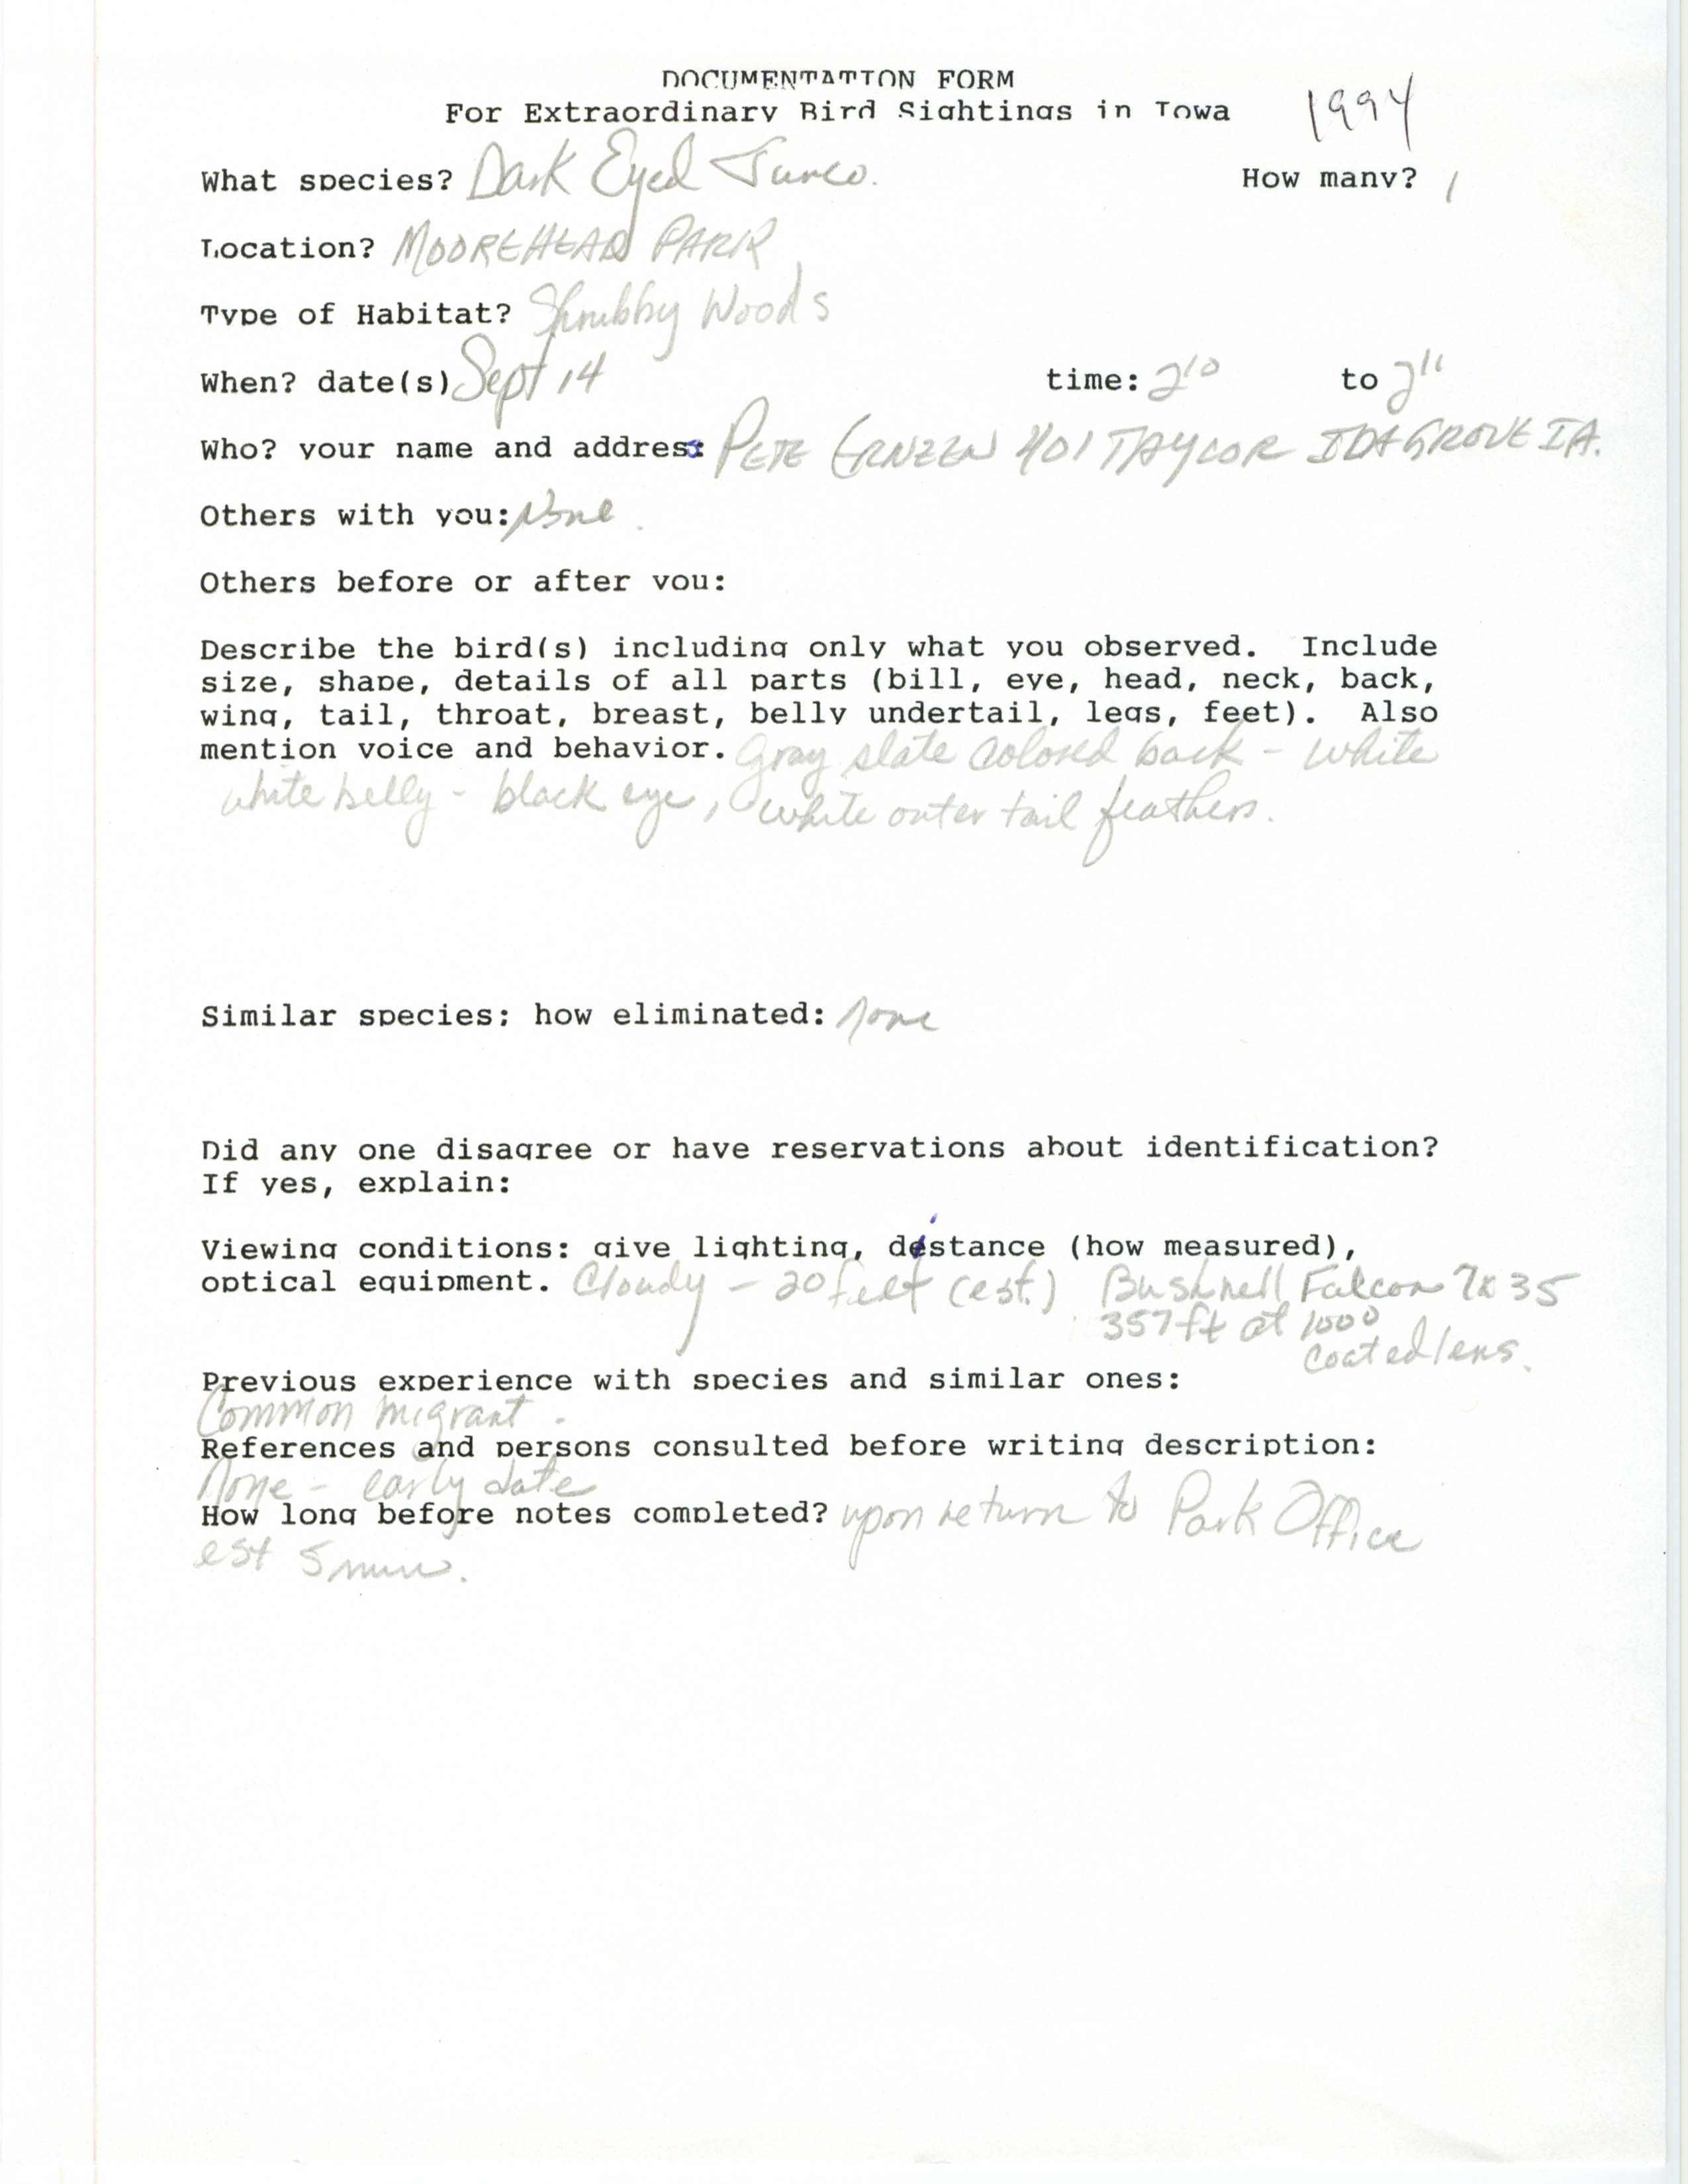 Rare bird documentation form for Dark-eyed Junco at Moorehead Pioneer Park in Ida County, 1994